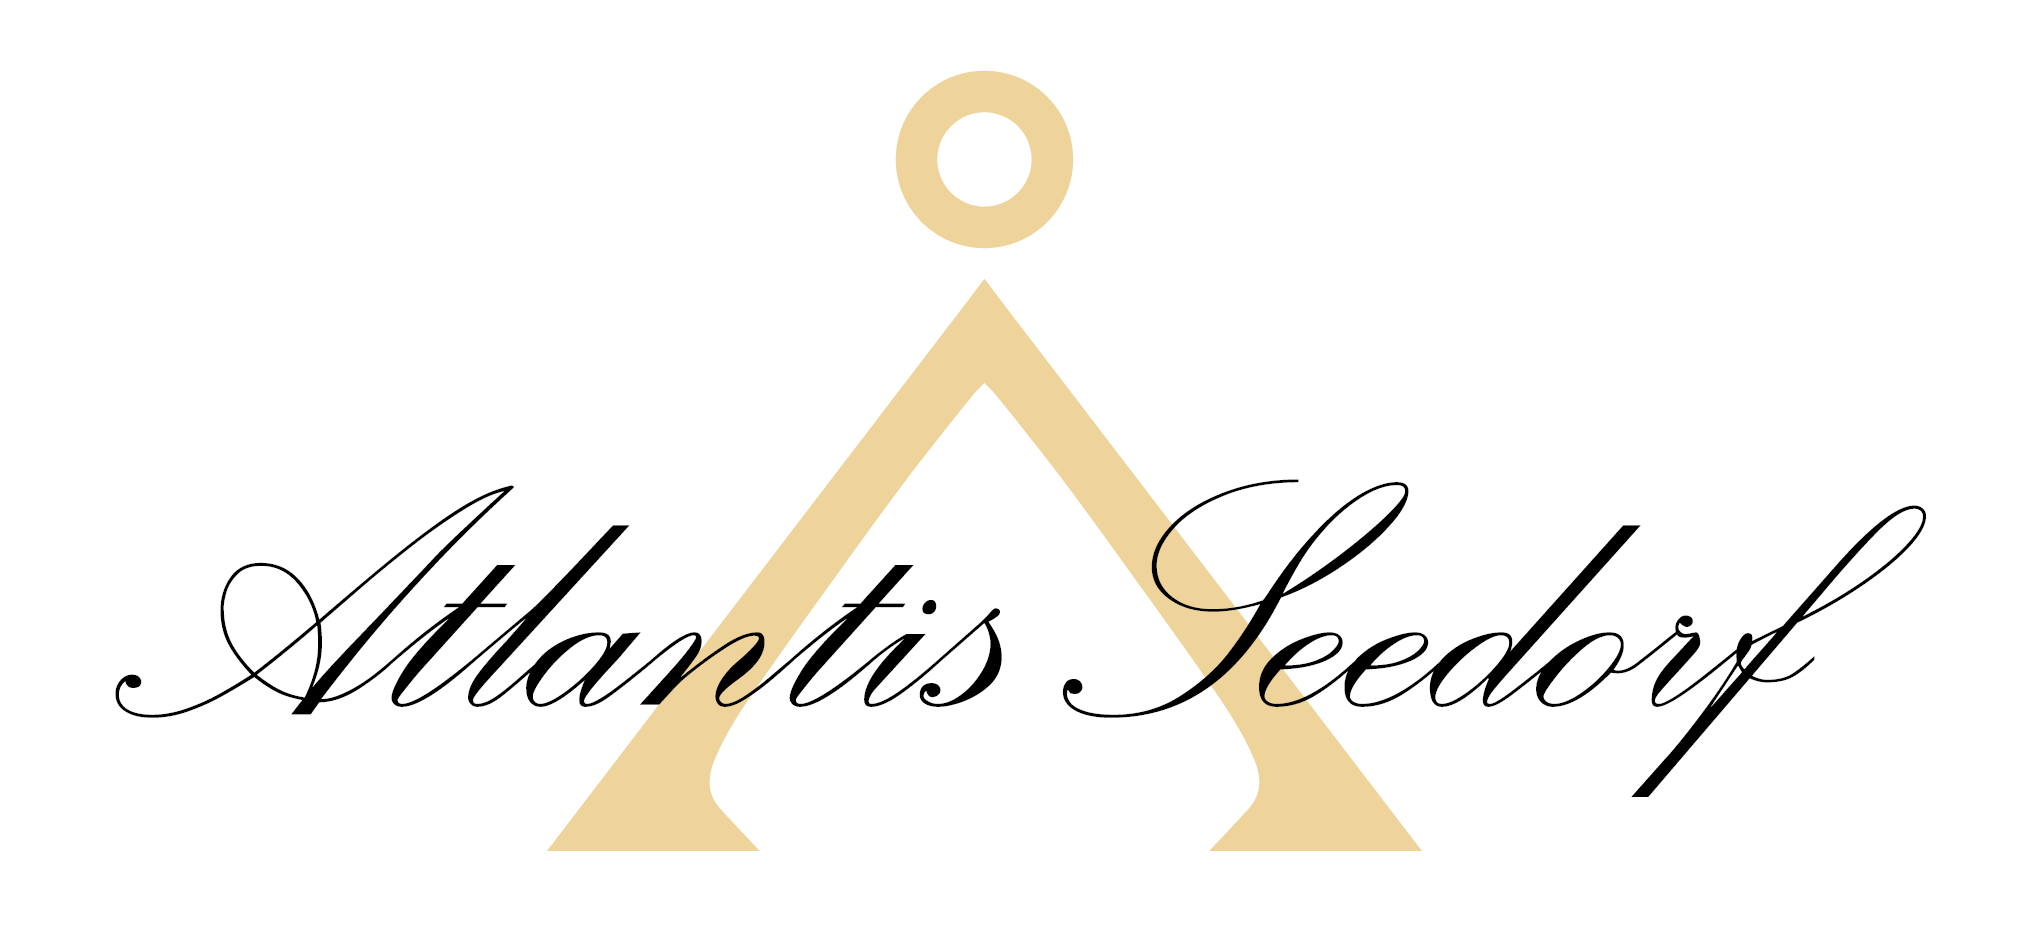 Atlantis-Seedorf